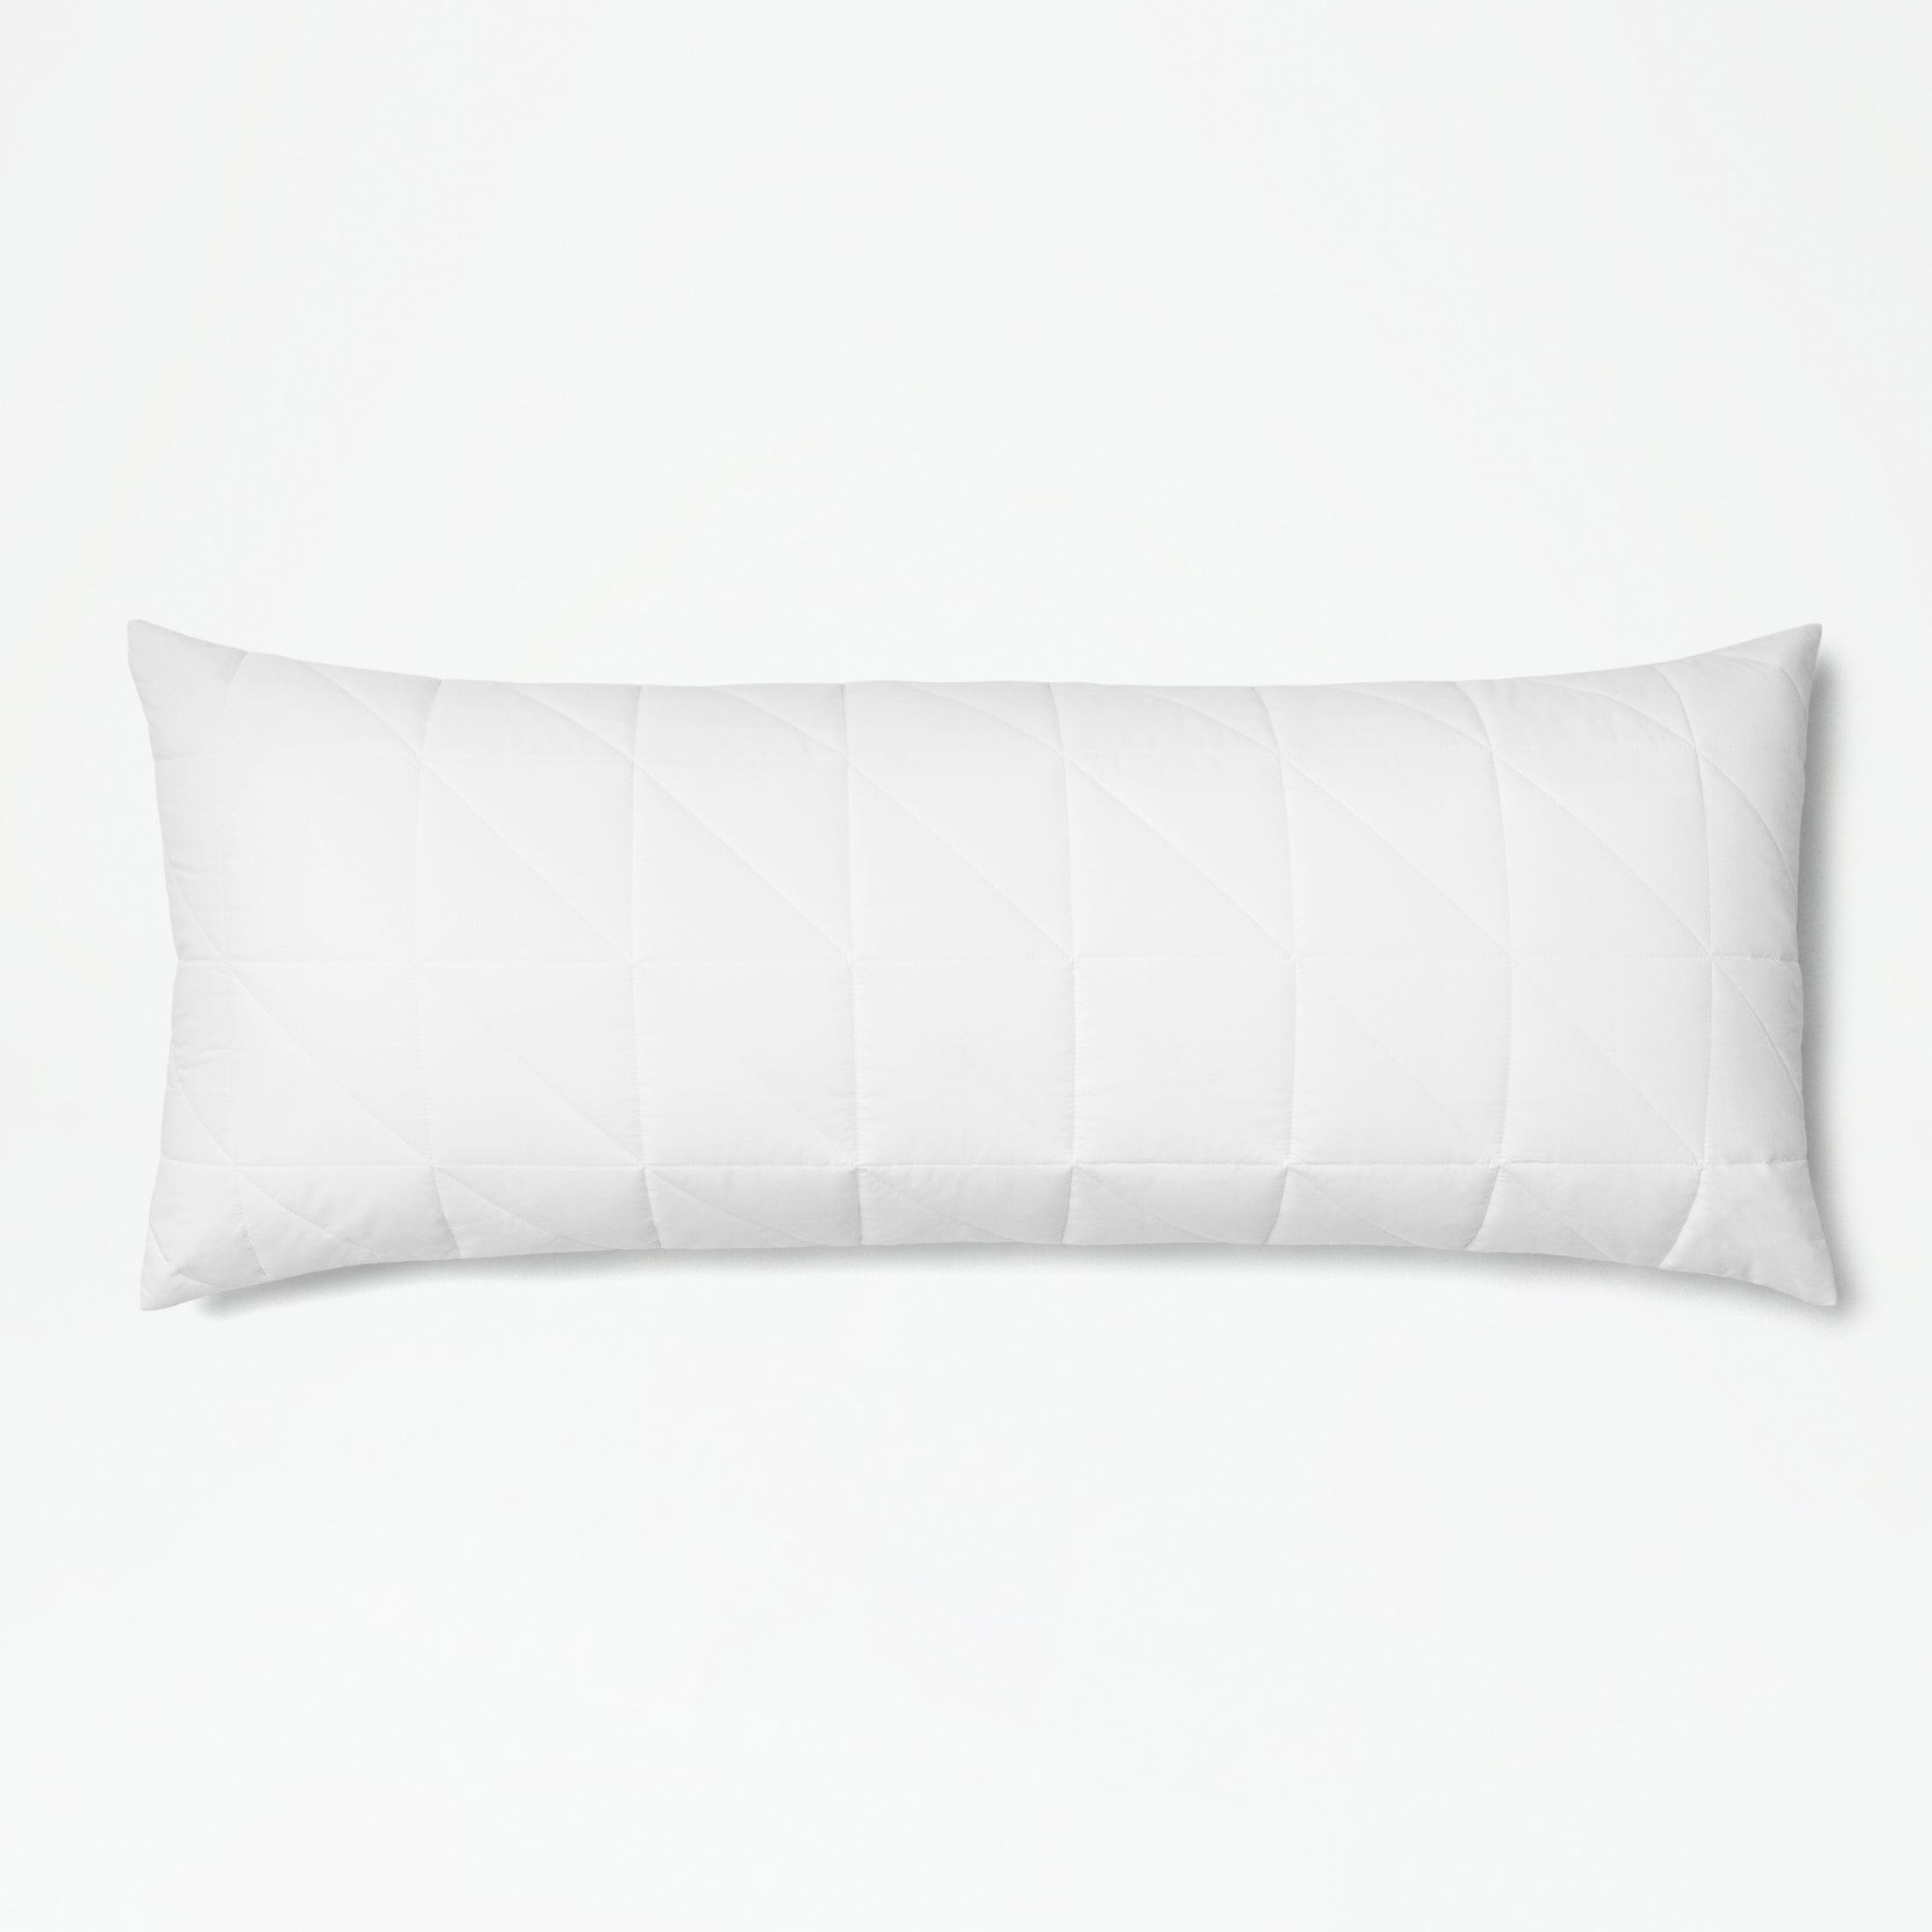 Wholesale Cheap Anime Male Body Pillow - Buy in Bulk on DHgate.com